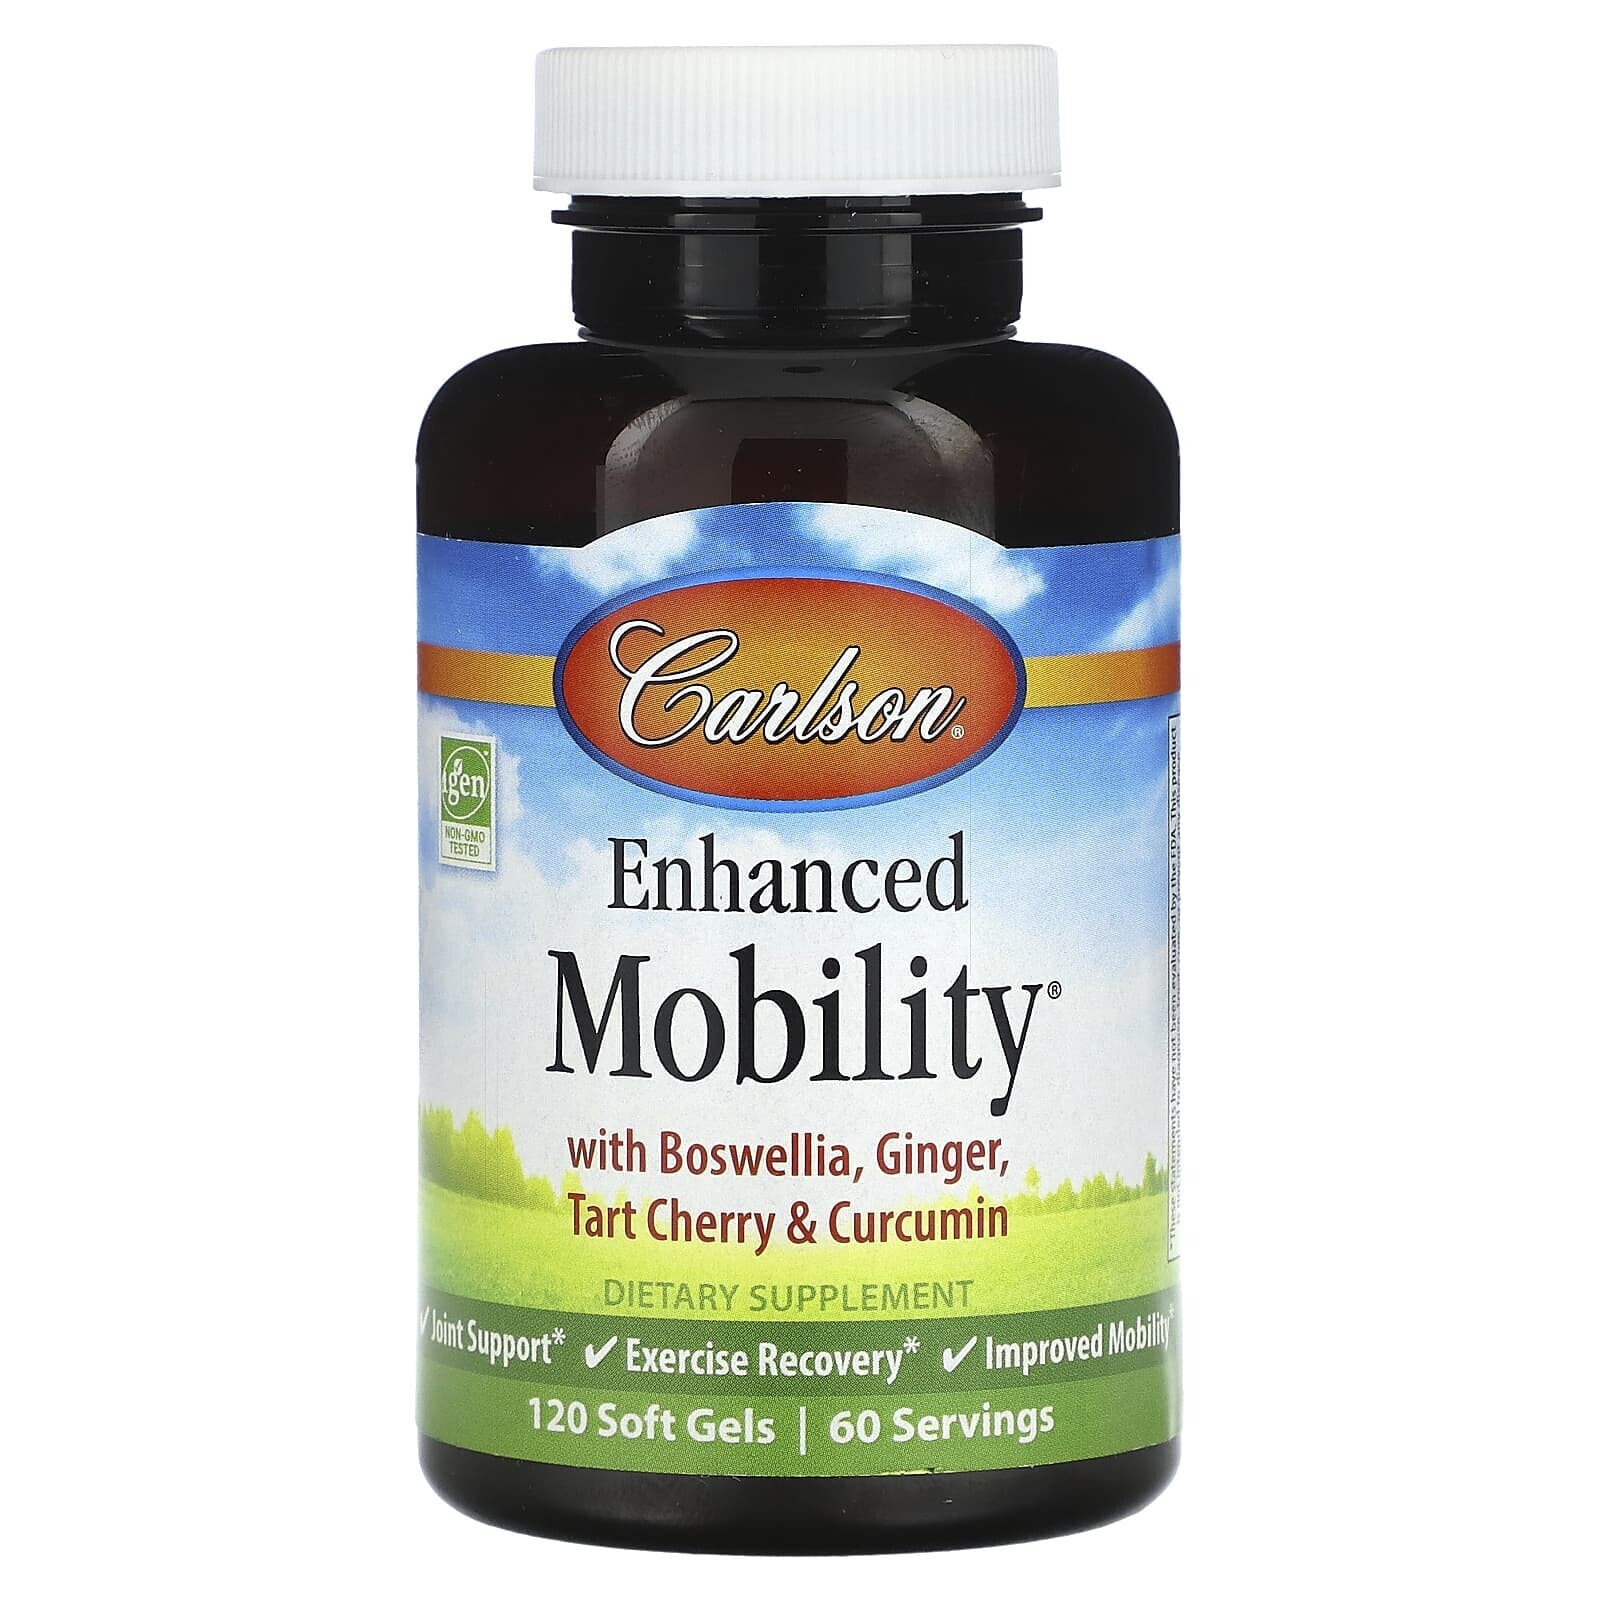 Carlson, Enhanced Mobility, 30 мягких таблеток